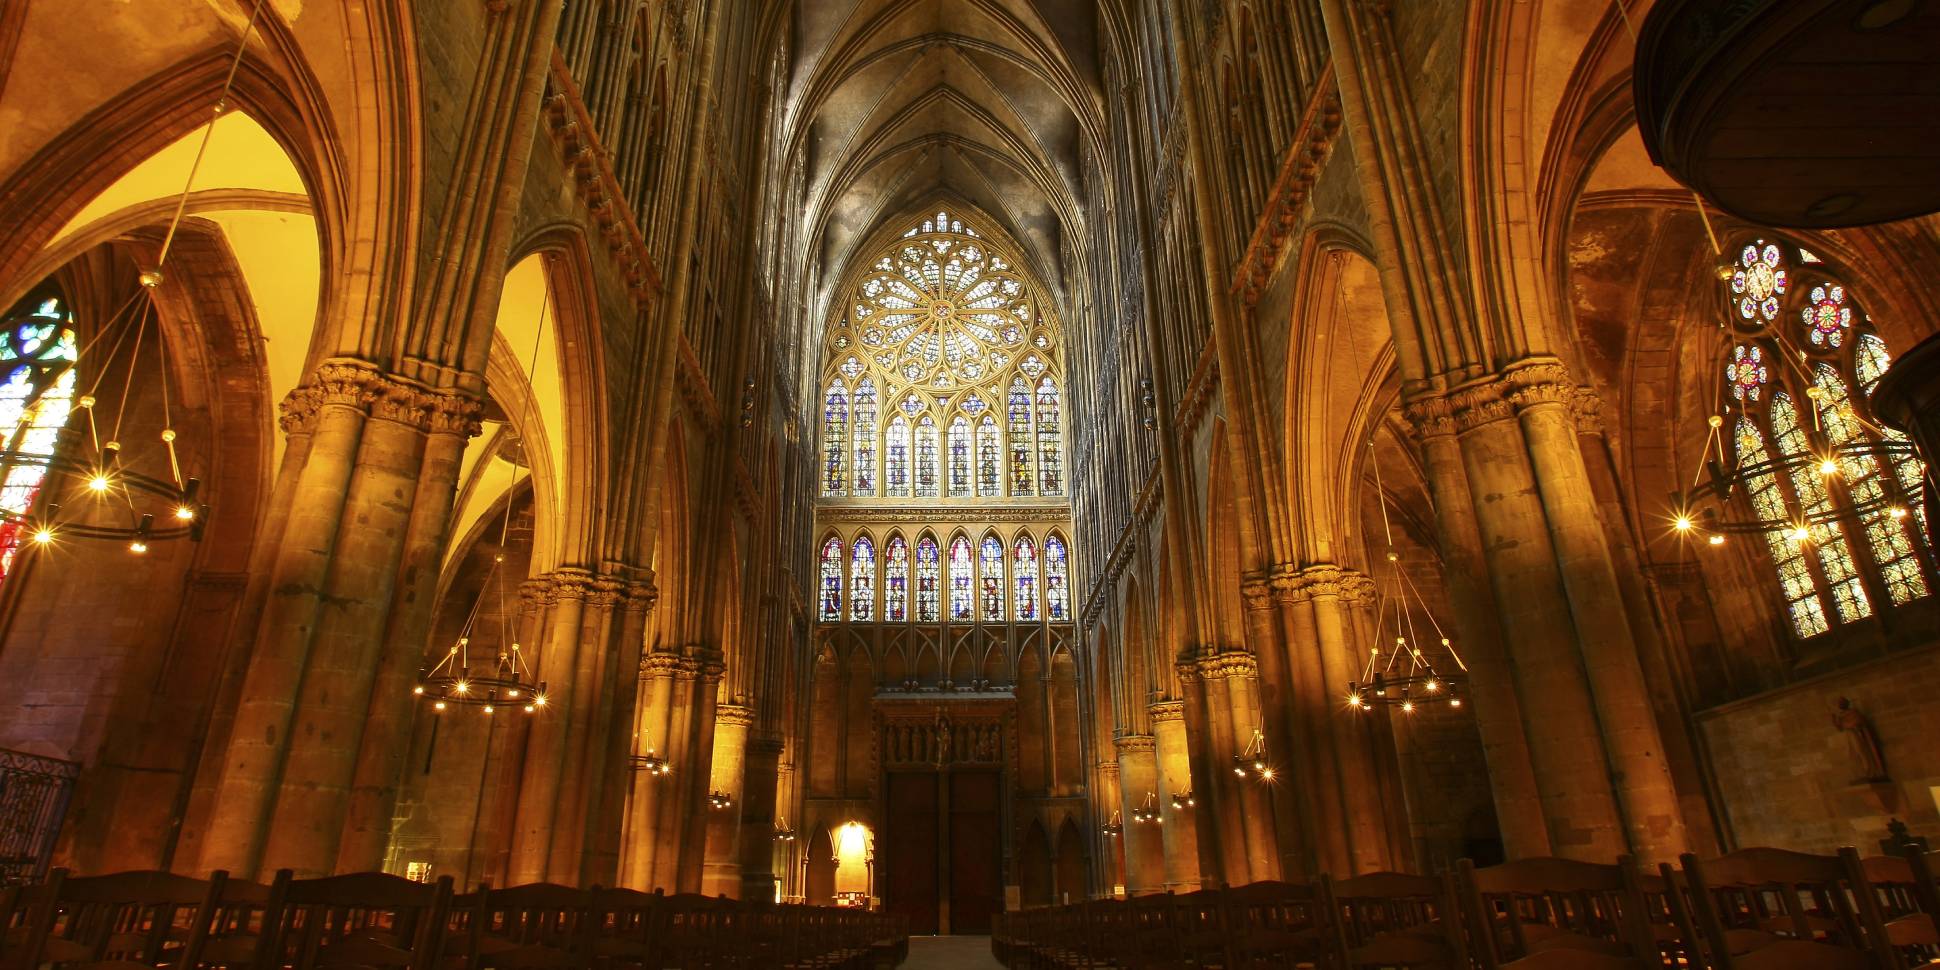 Saint-Etienne cathedral in Metz